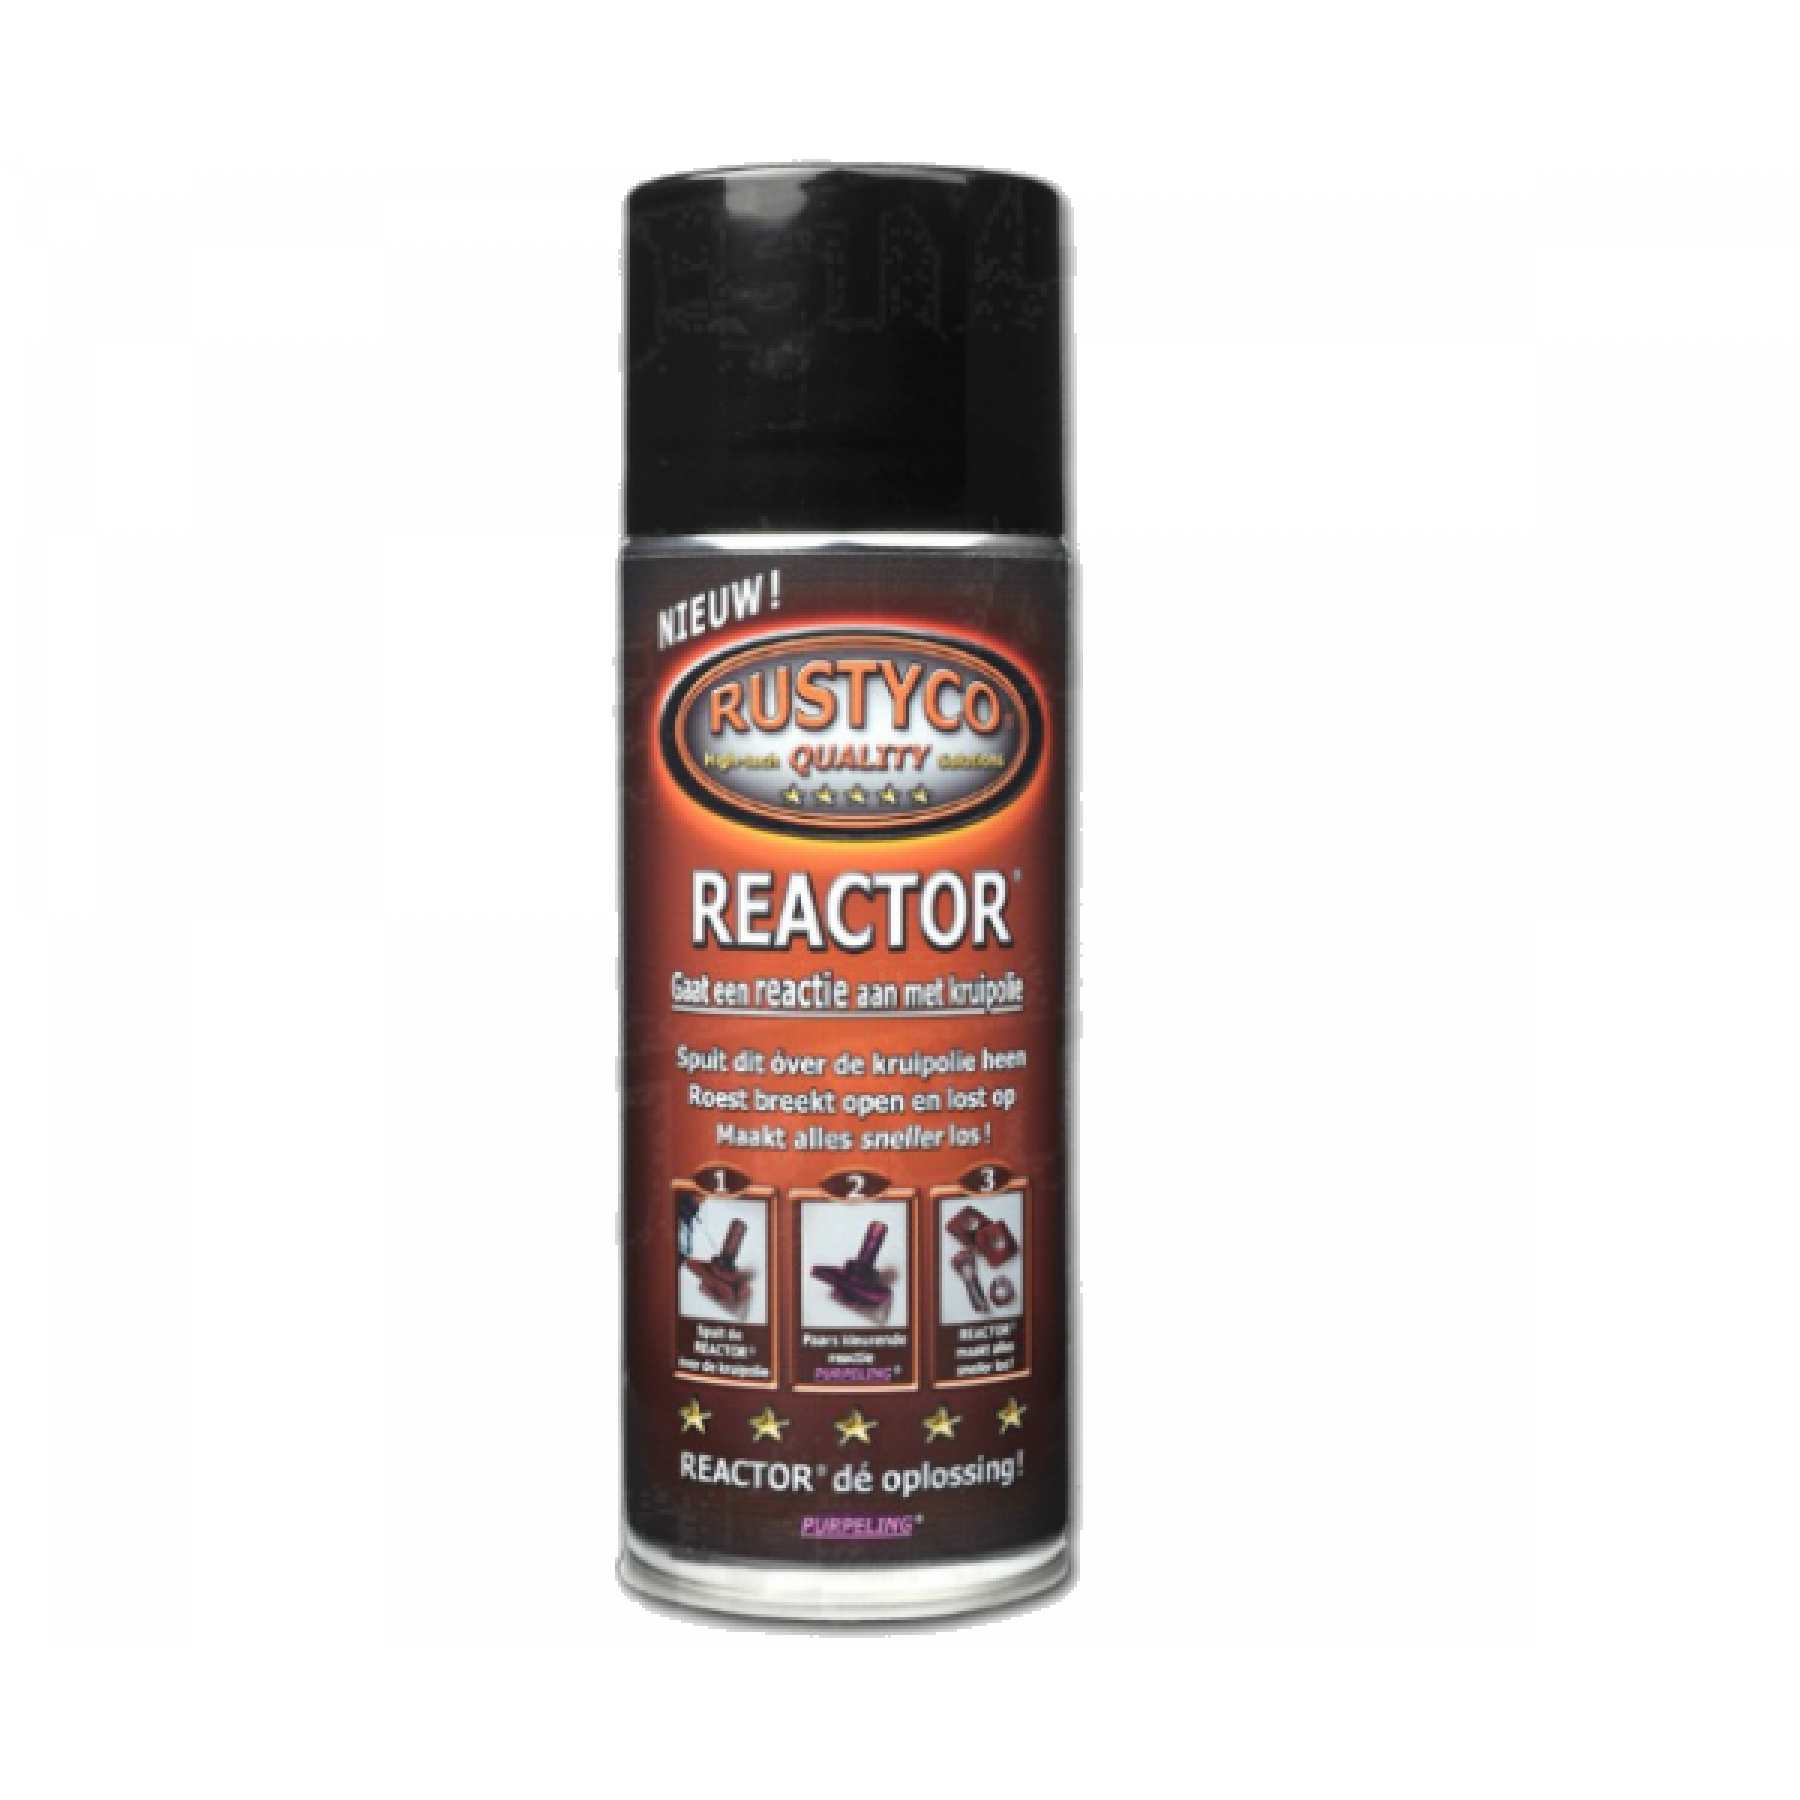 Rustyco Reactor 300 ml.